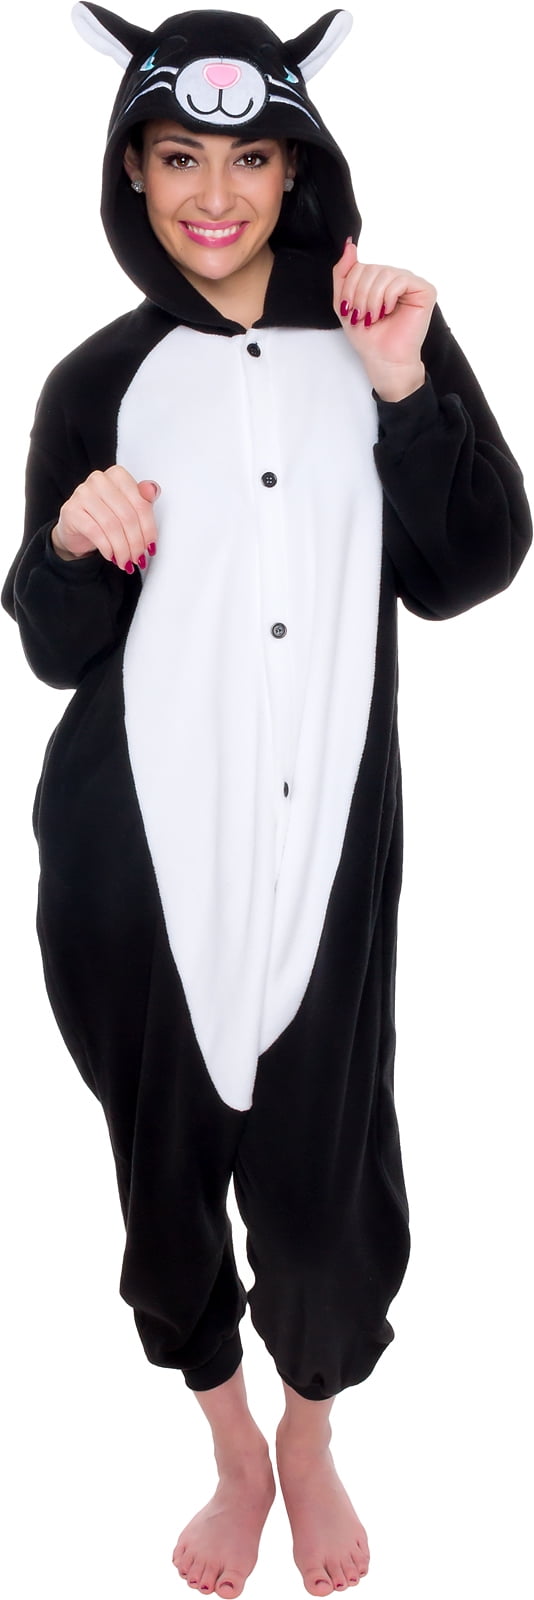 NEWCOSPLAY Unisex Children Black Cat Pajamas Halloween Costume